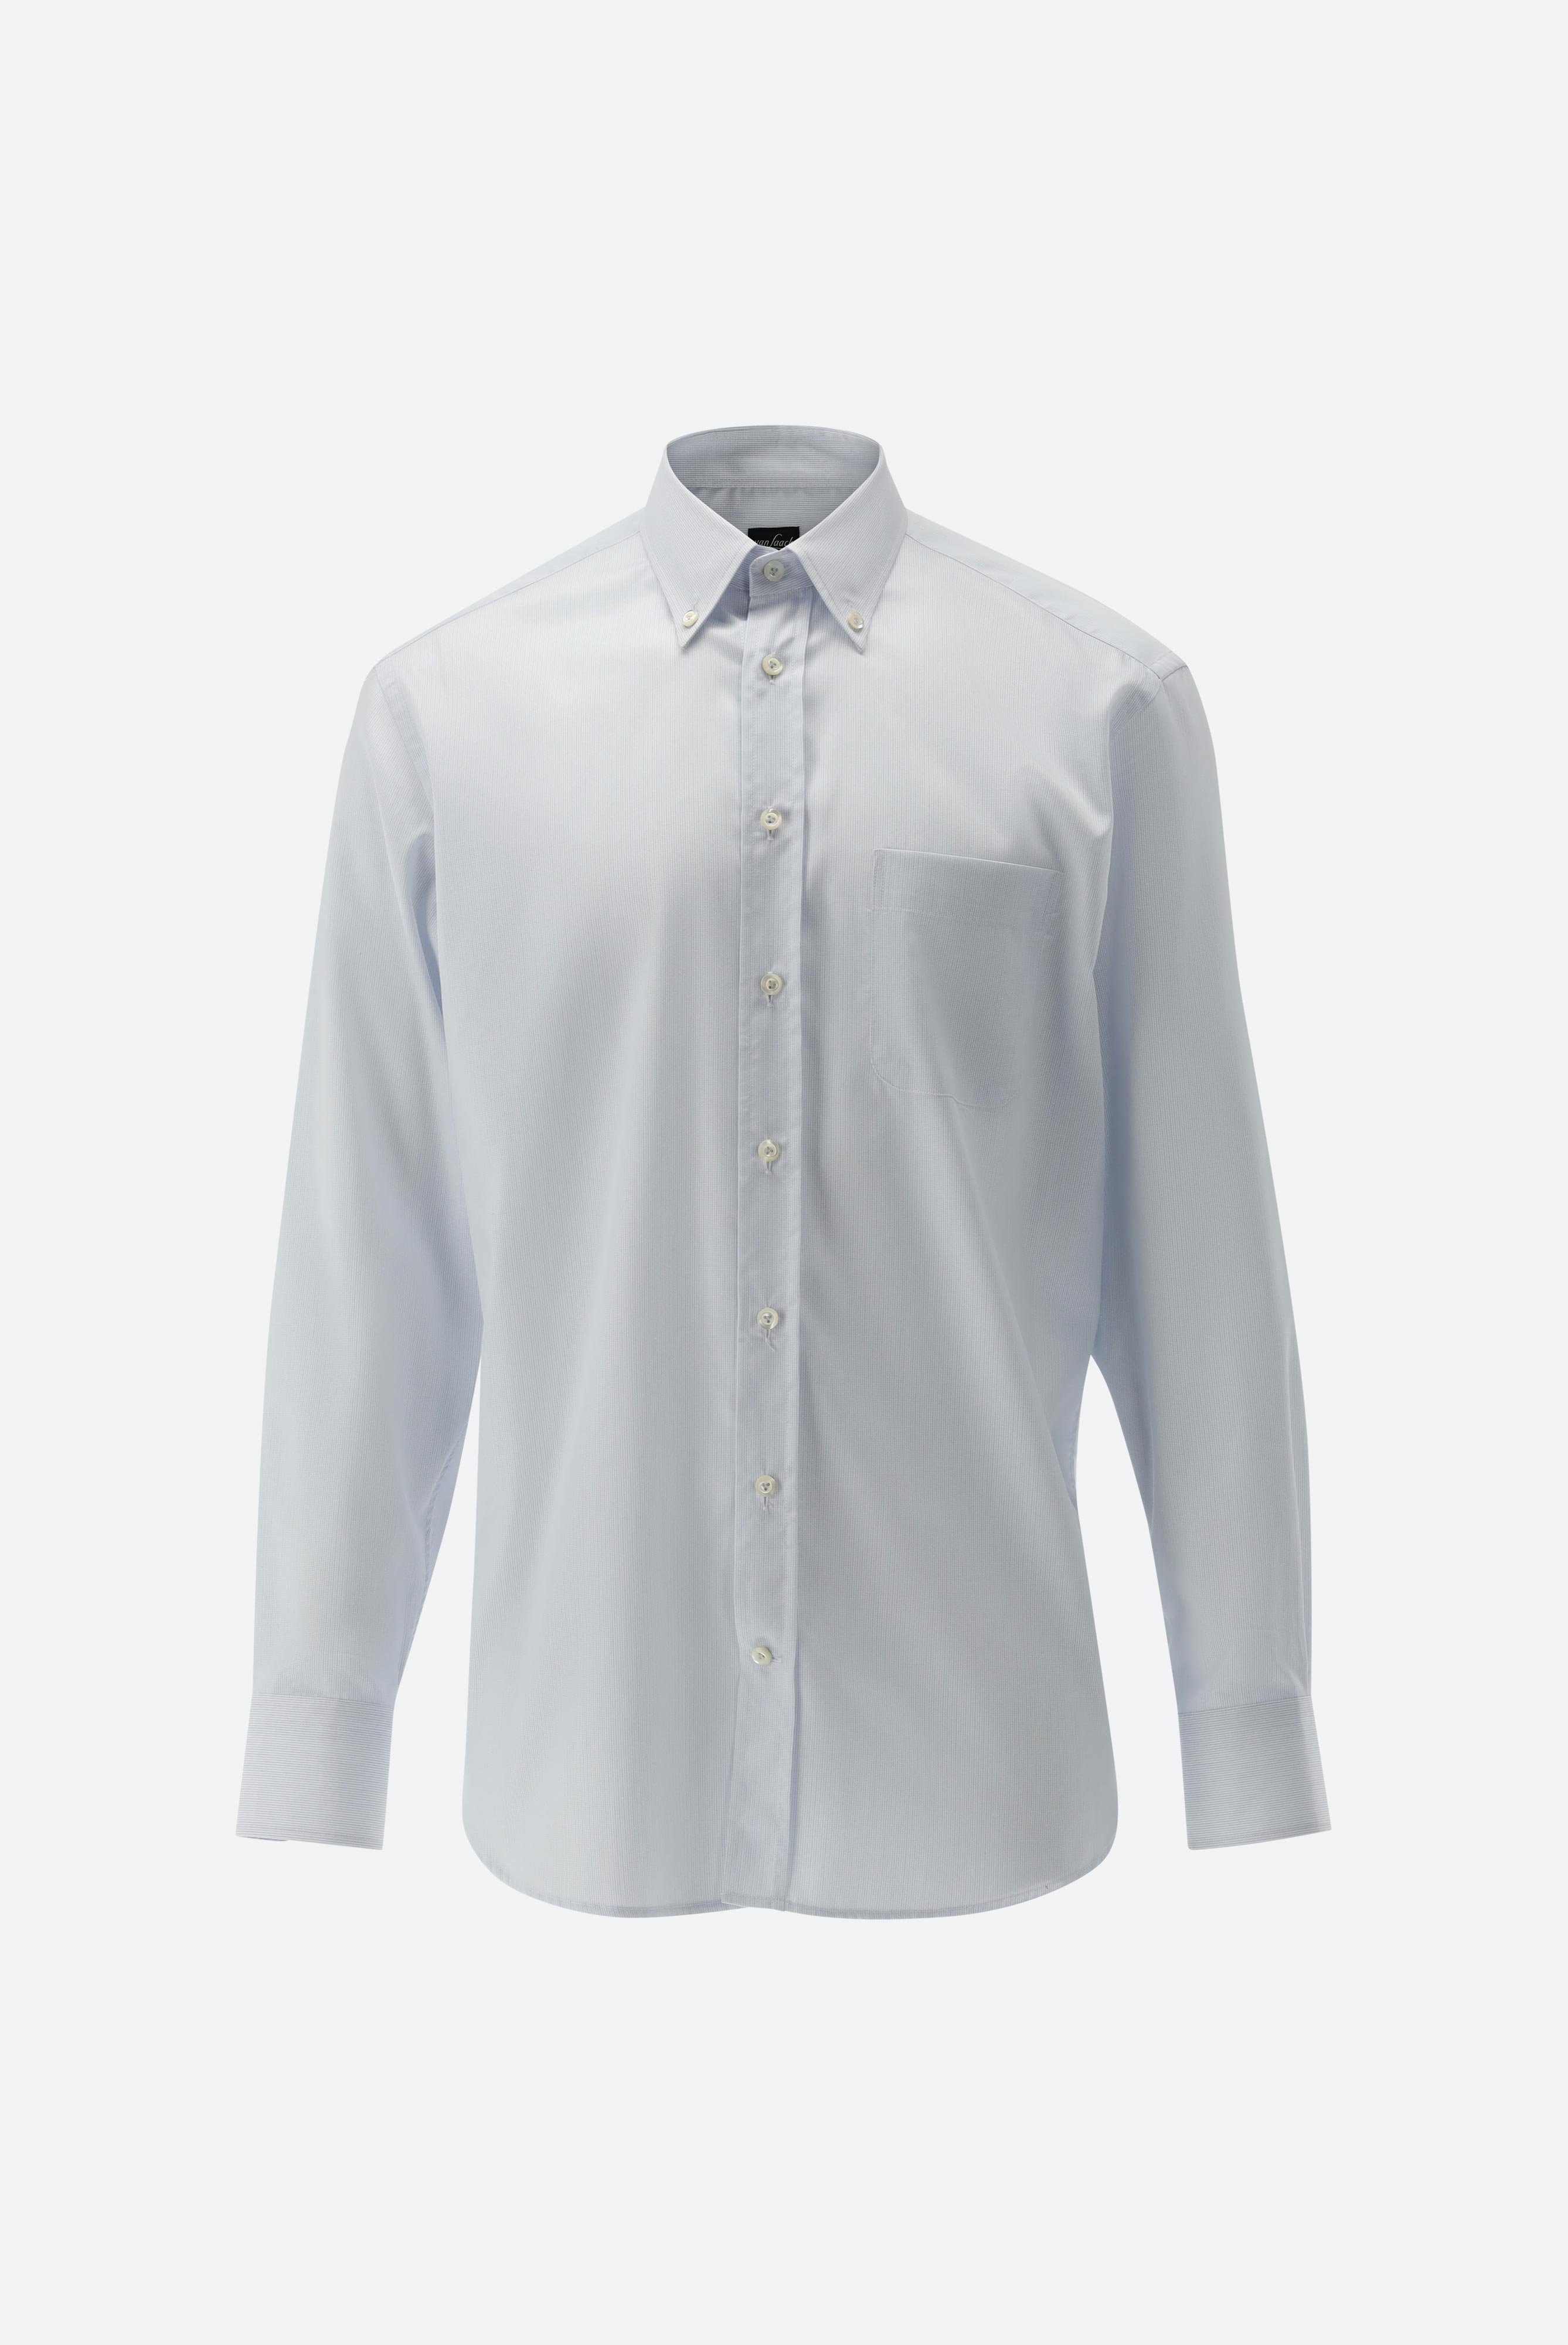 Bügelleichte Hemden+Bügelfreies Businesshemd Comfort Fit+20.2026.BQ.162611.720.39